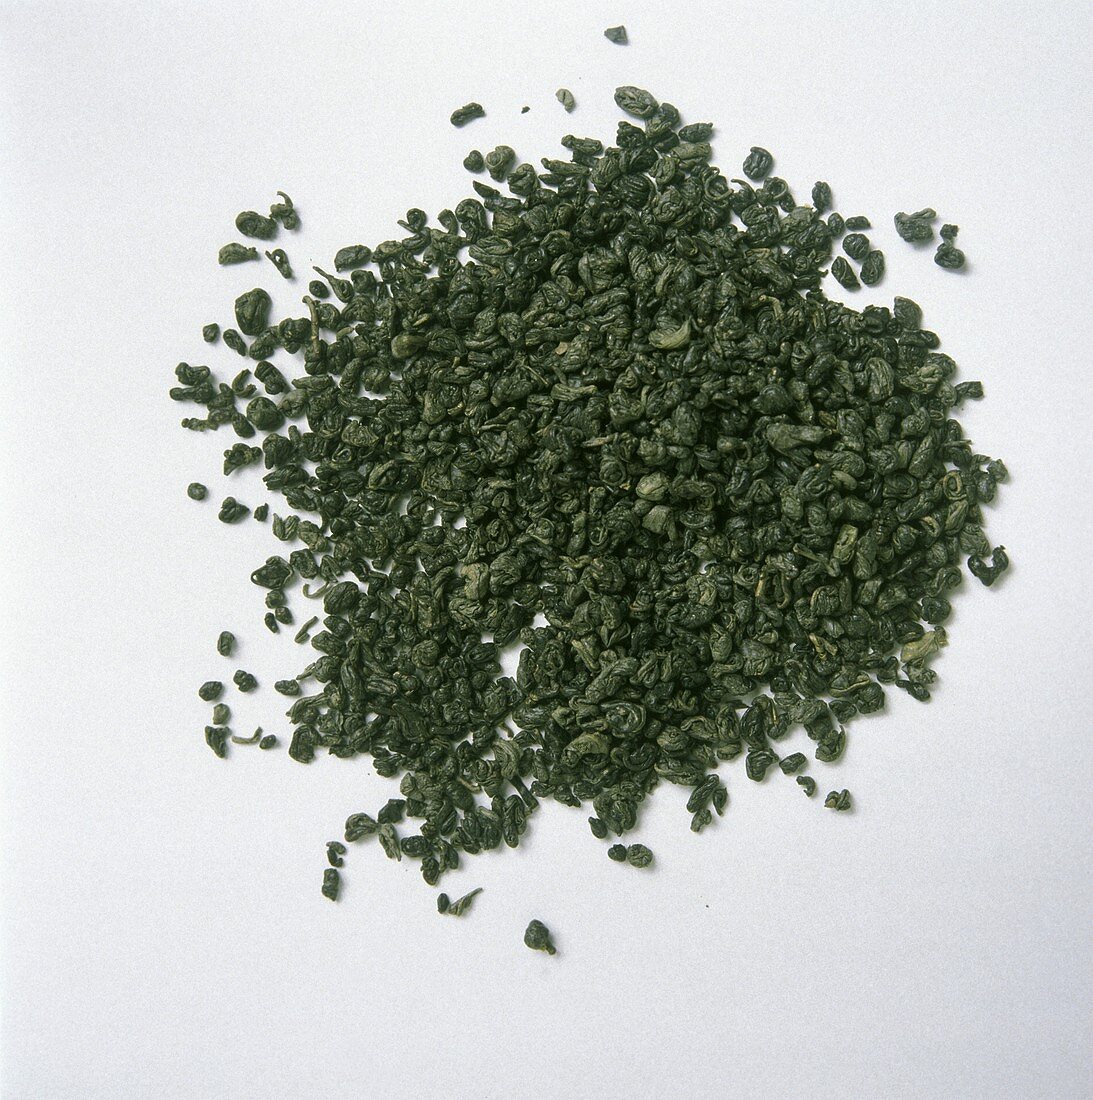 Rolled Green Tea Leaves